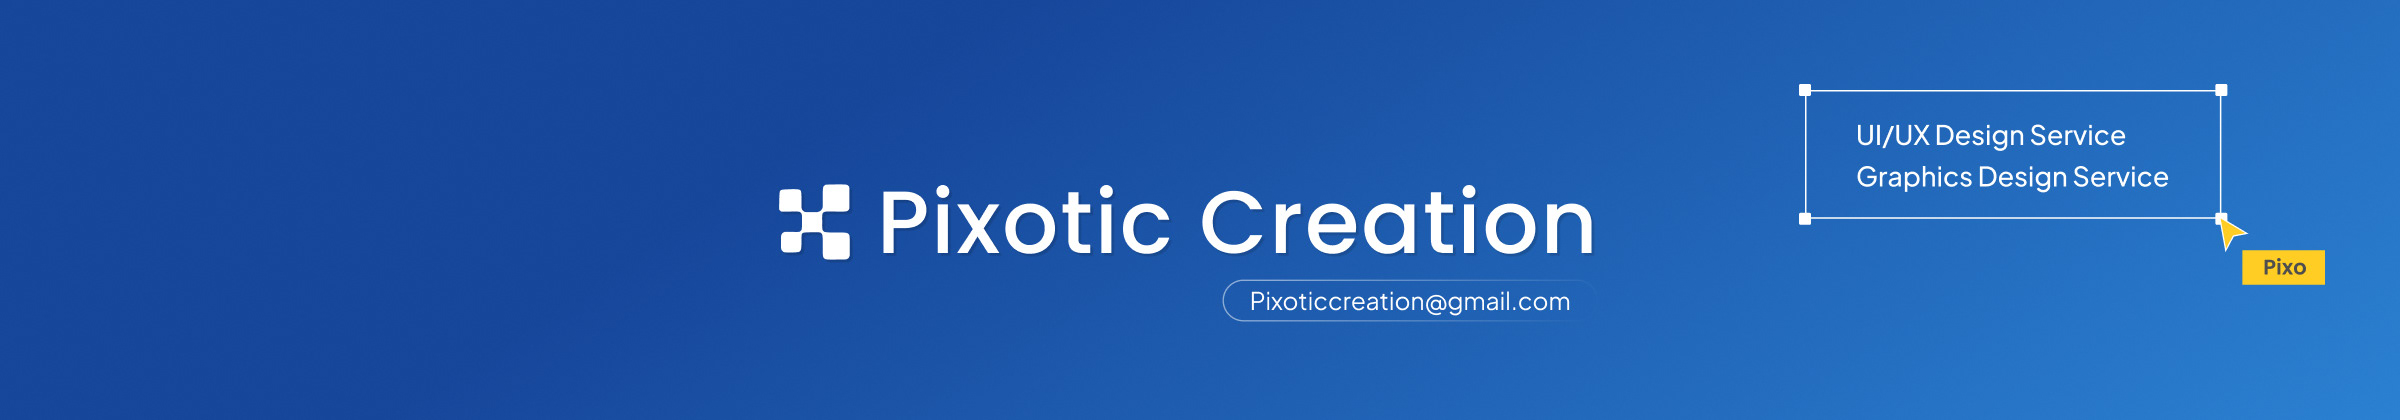 Pixotic Creations profilbanner